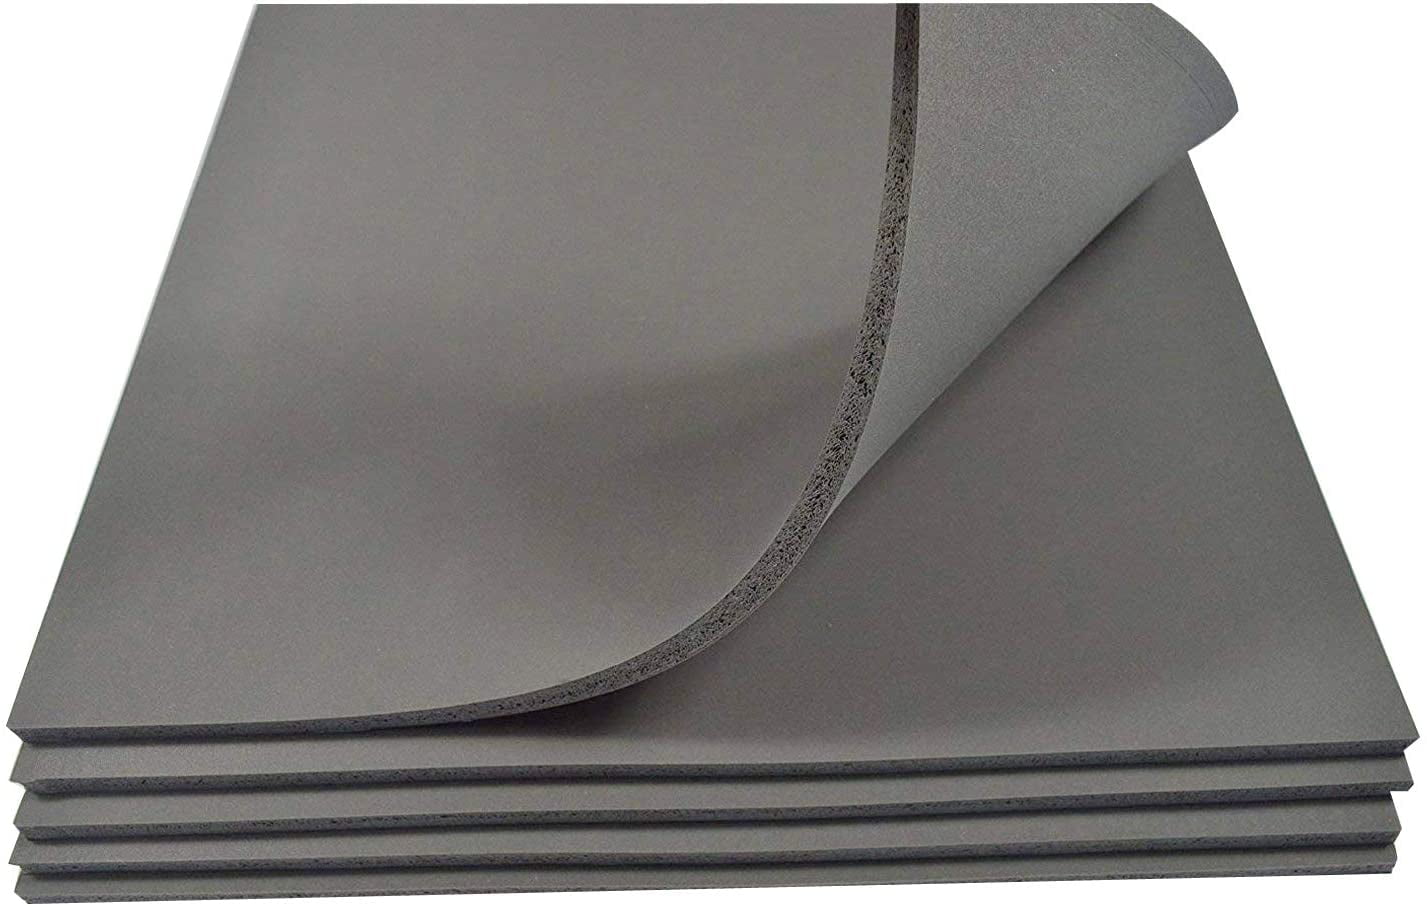 Heat Press Transfer Replace High Temperature Pad 16"x20" Gray 0.31" Silicone New 